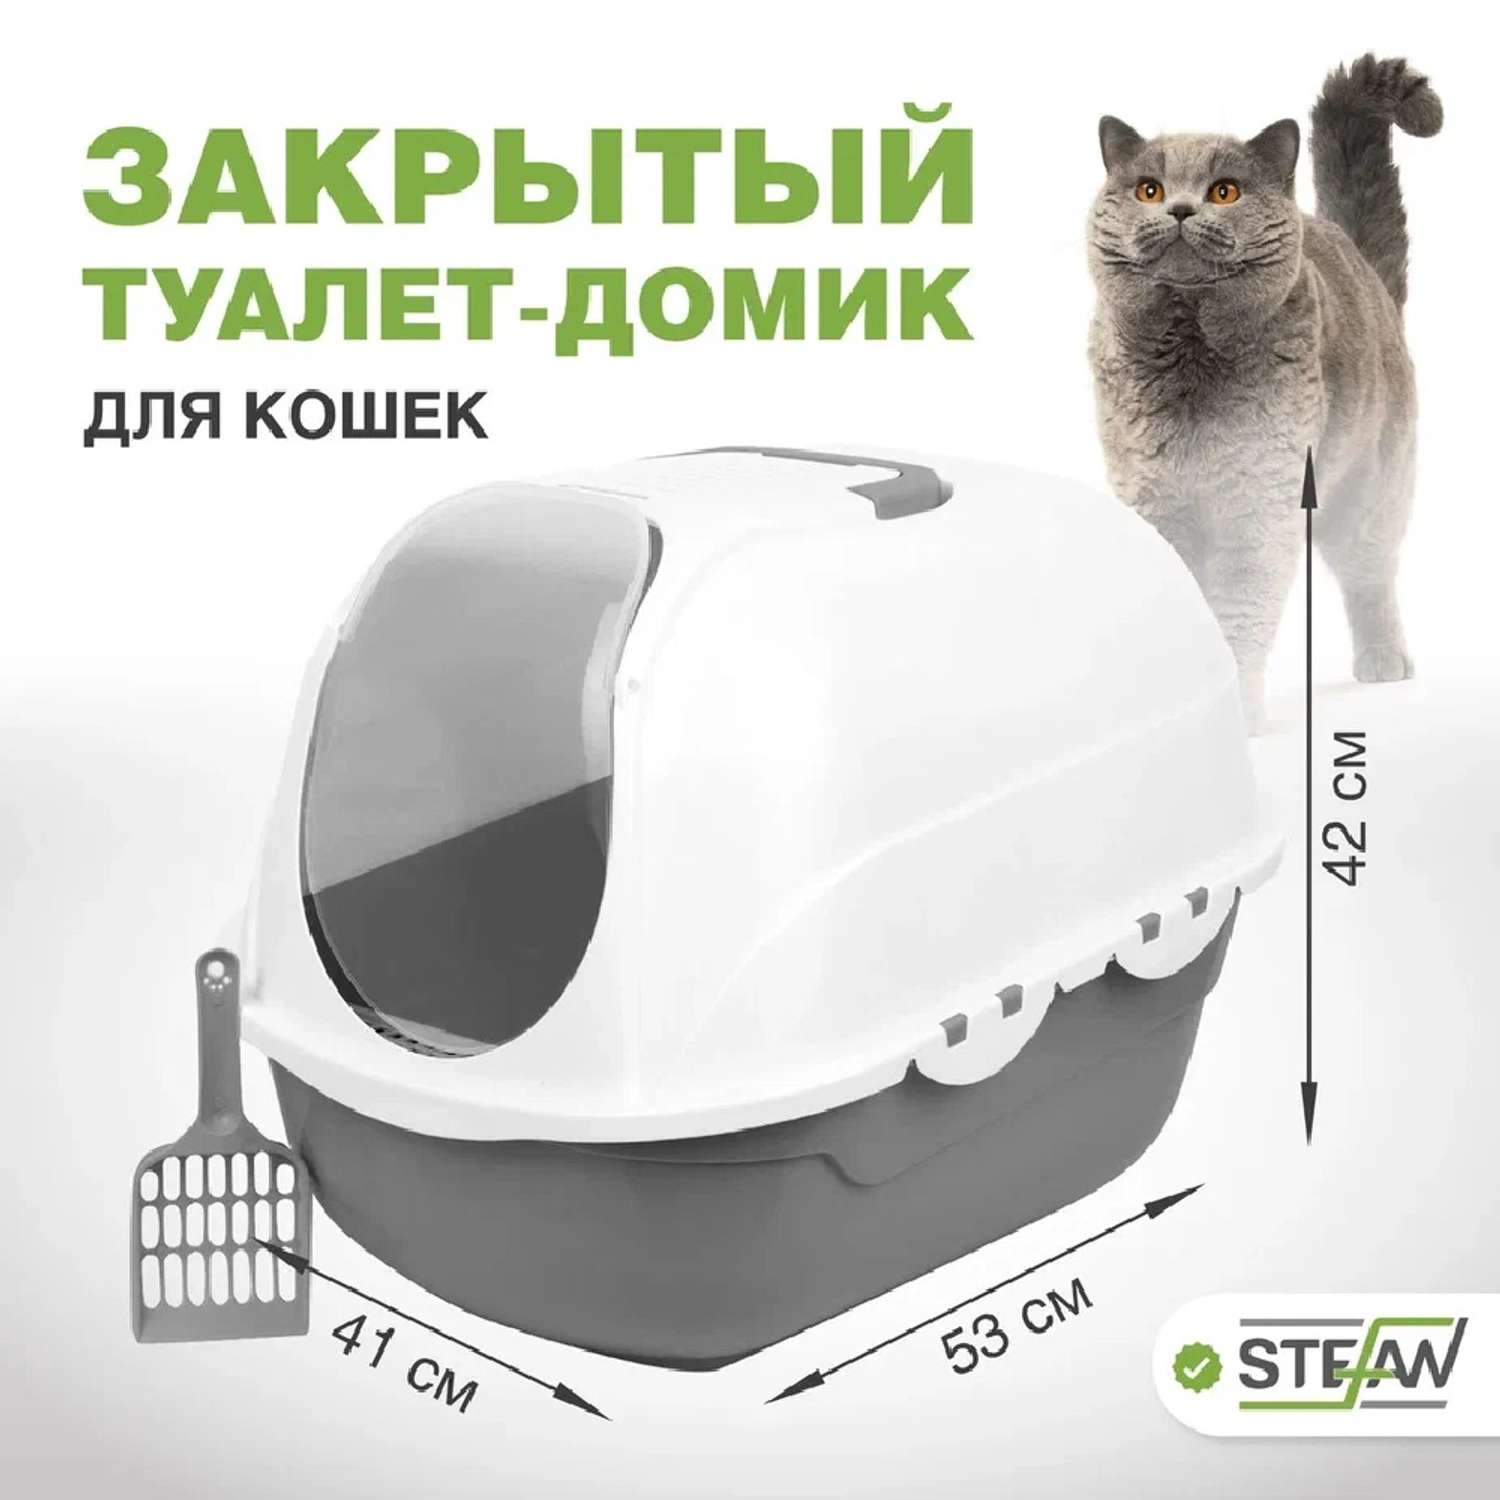 Туалет-лоток для кошек Stefan закрытый с совком 53х41х42 см серый - фото 1